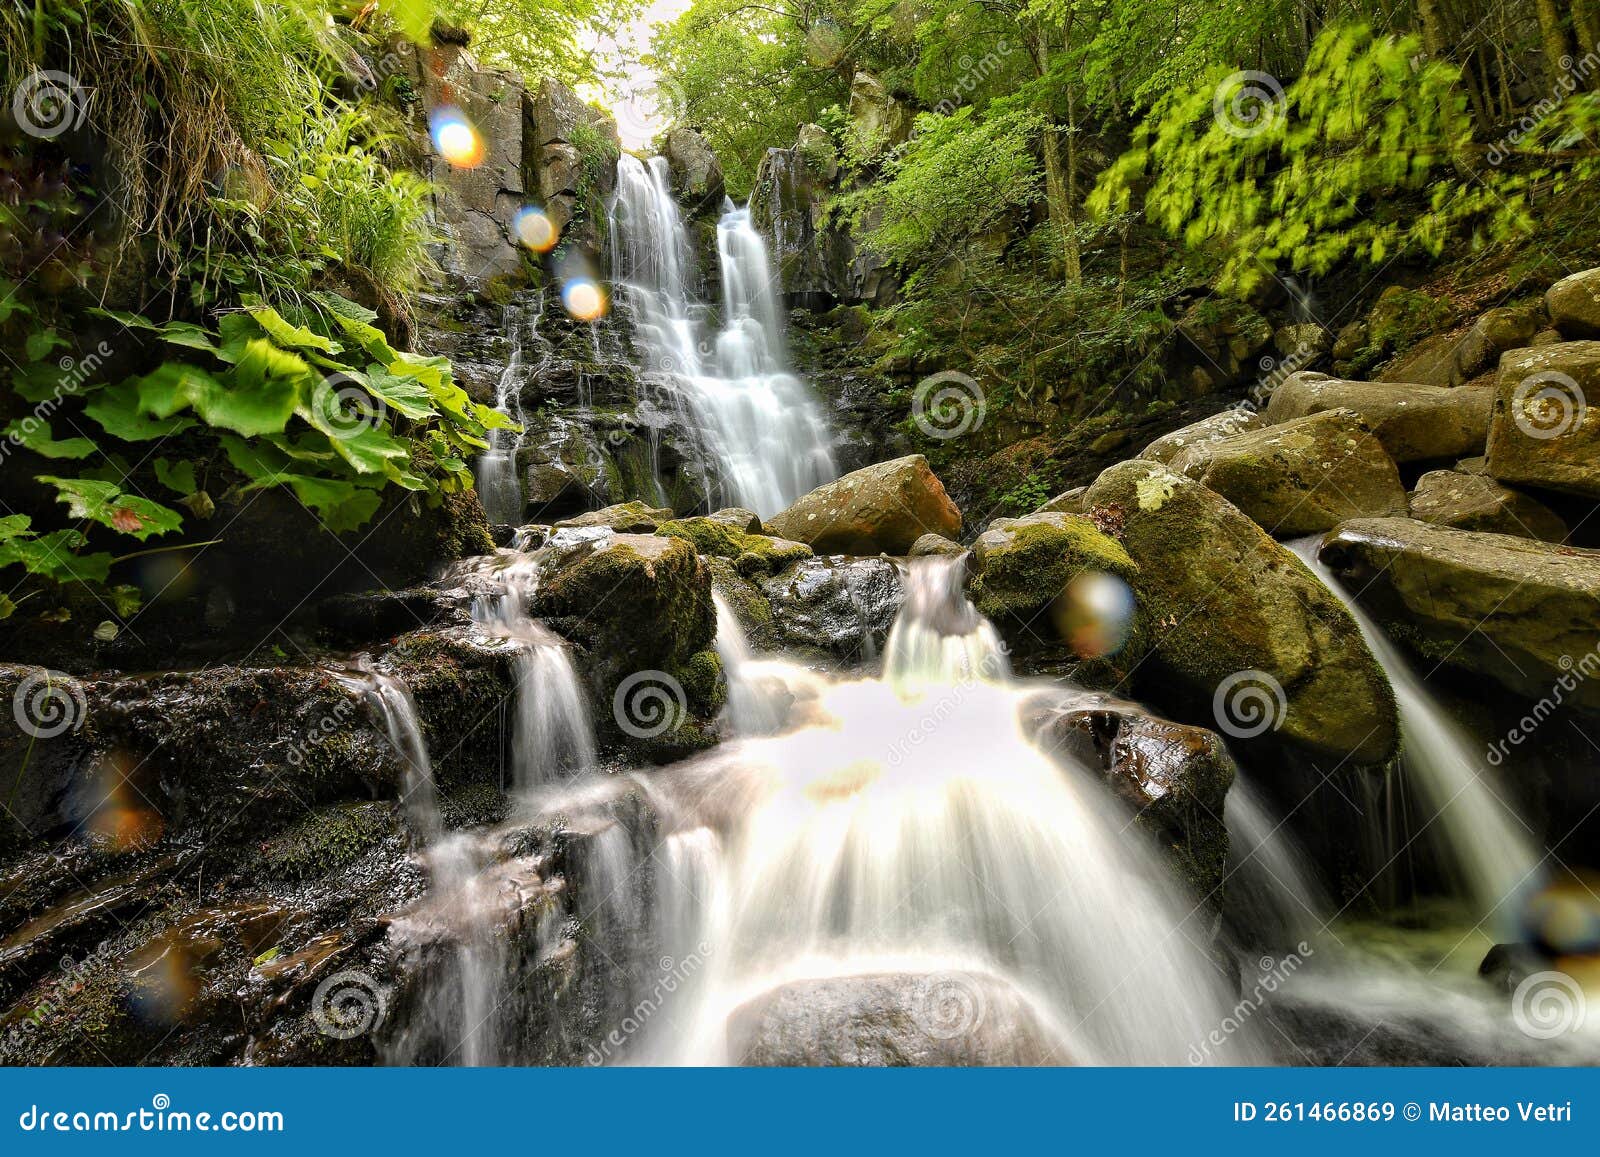 dardagna waterfalls italy